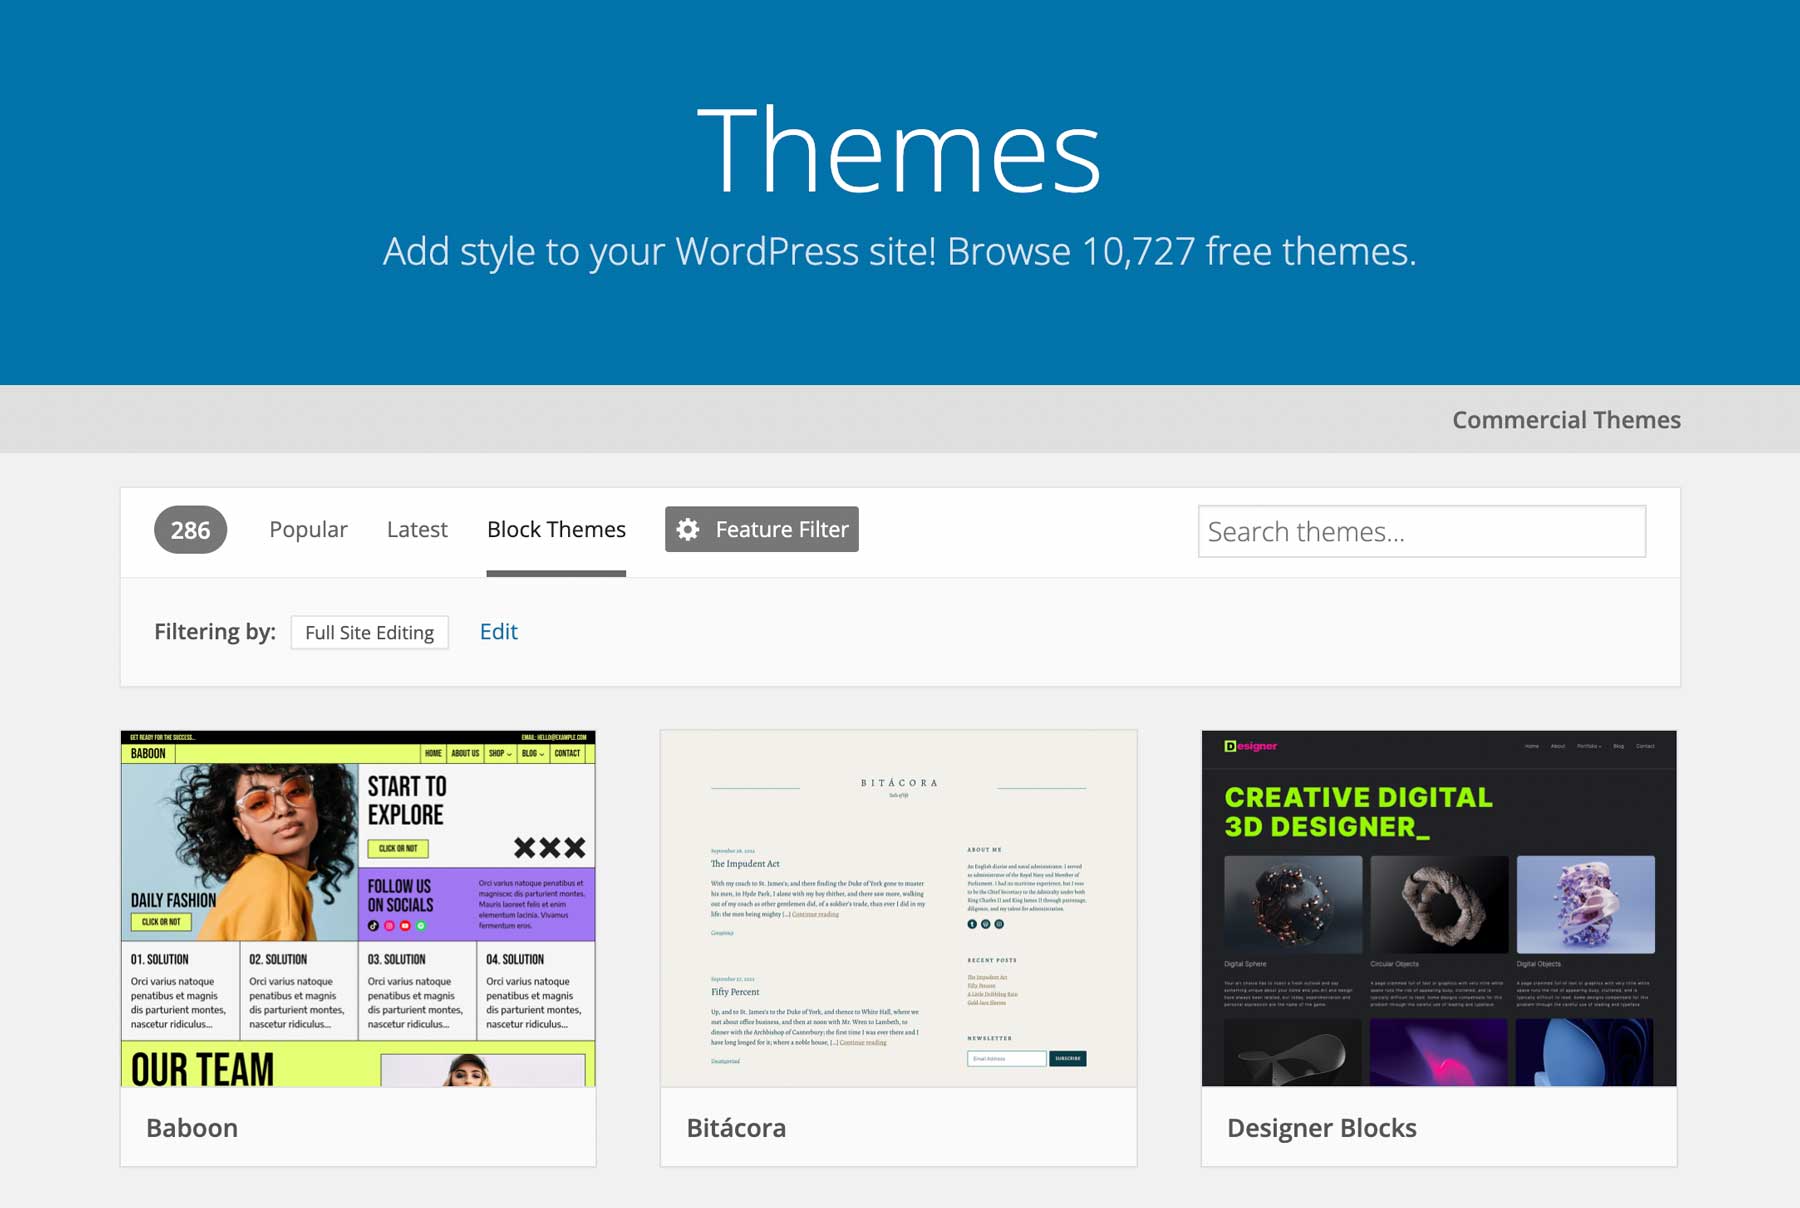 WordPress block themes